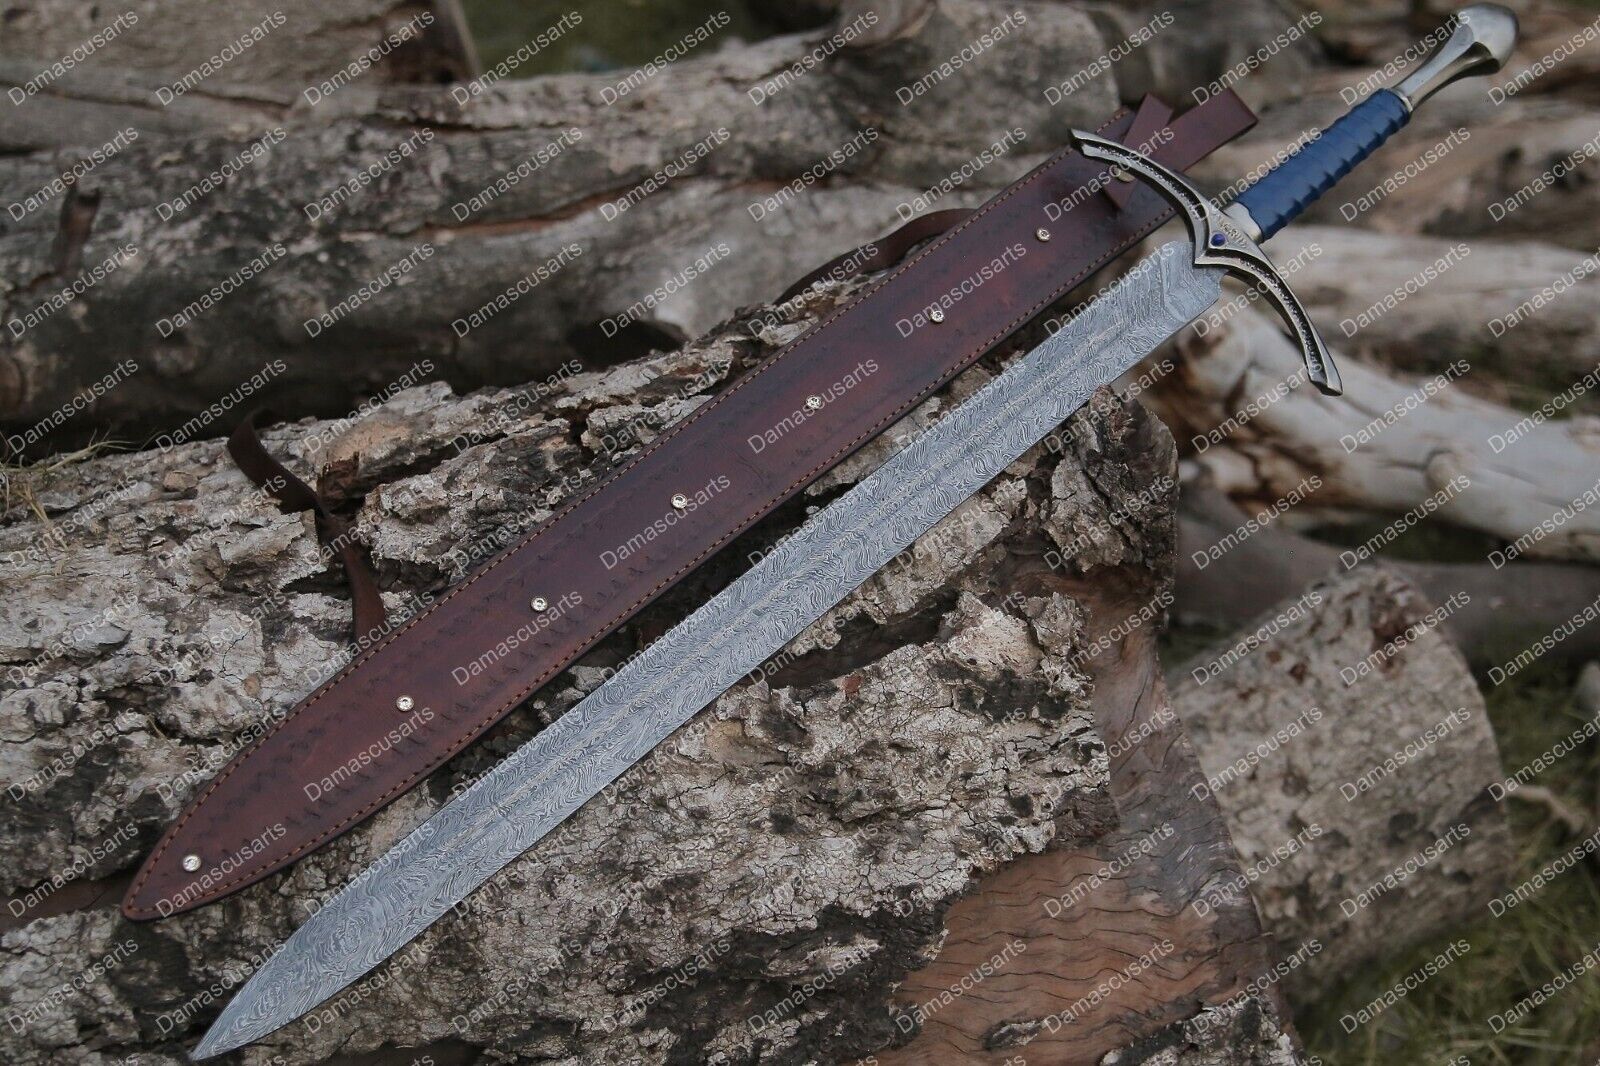 HANDMADE DAMASCUS STEEL VIKING SWORD WITH POMMEL HANDLE HUNTING SWORD AND SHEATH